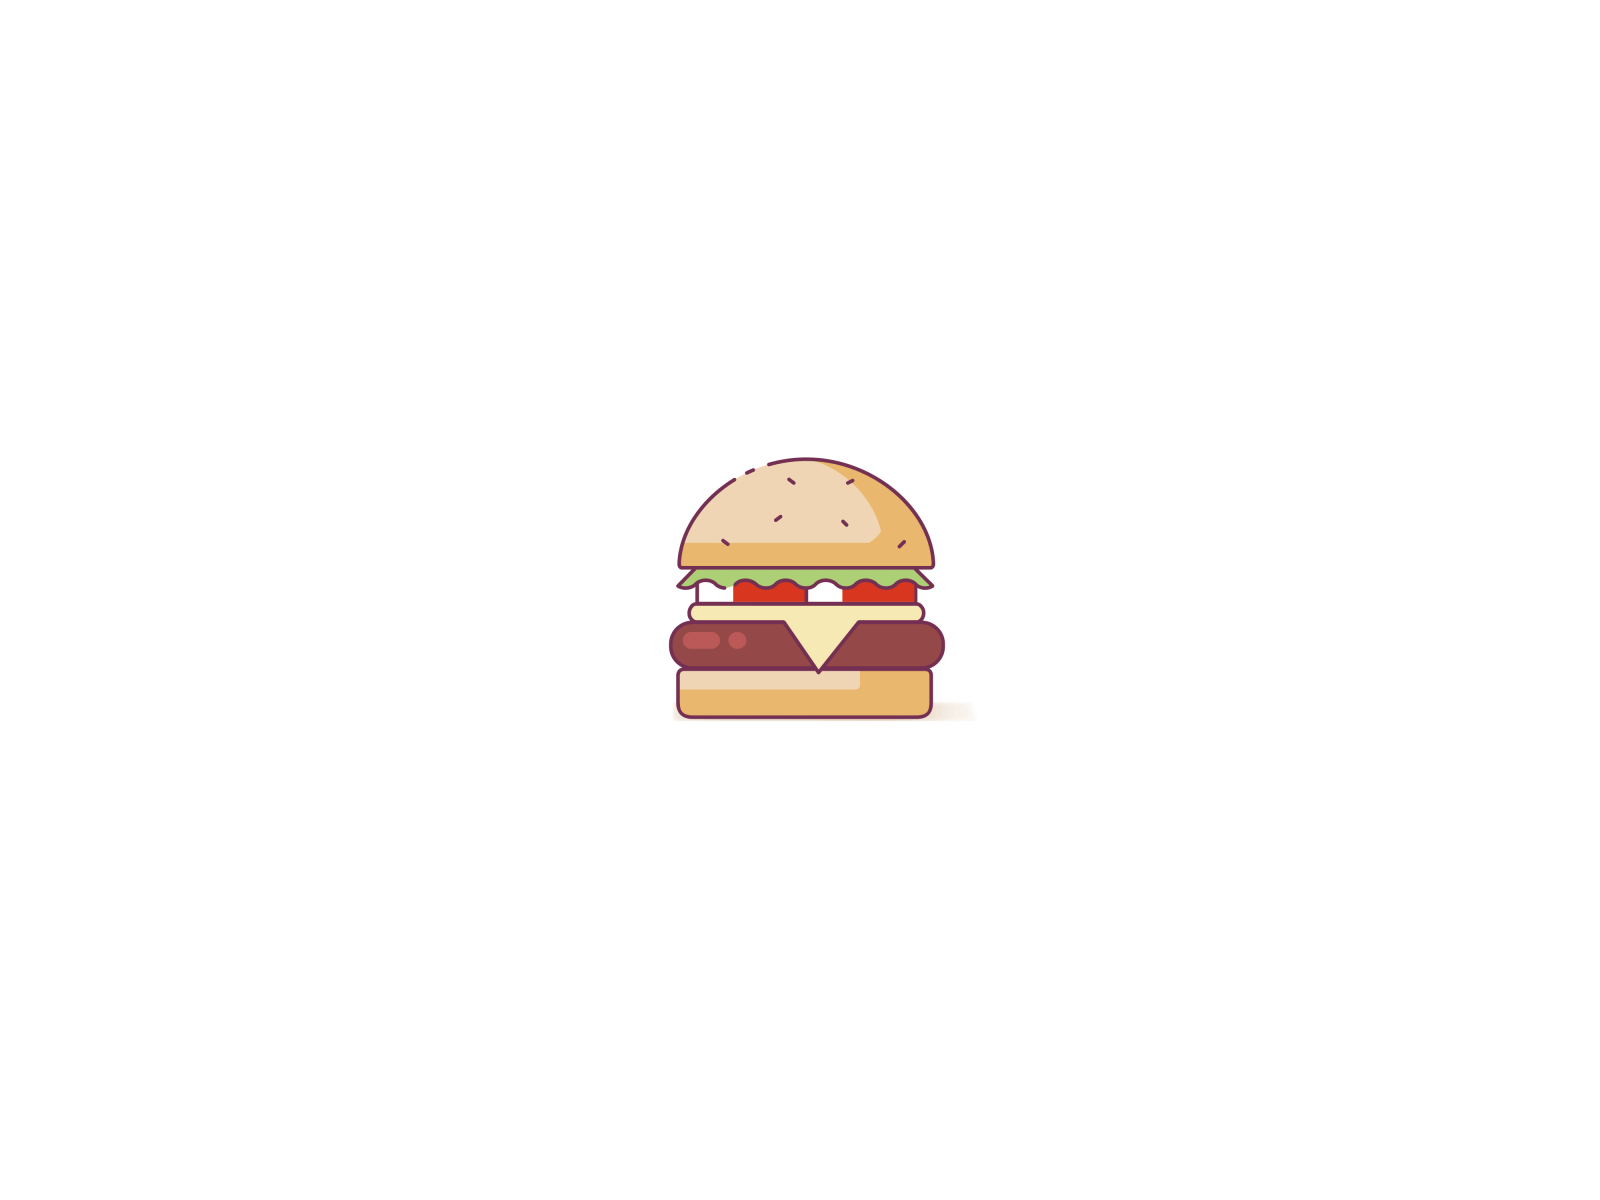 Bouncy Burger by Beijuan Miao on Dribbble